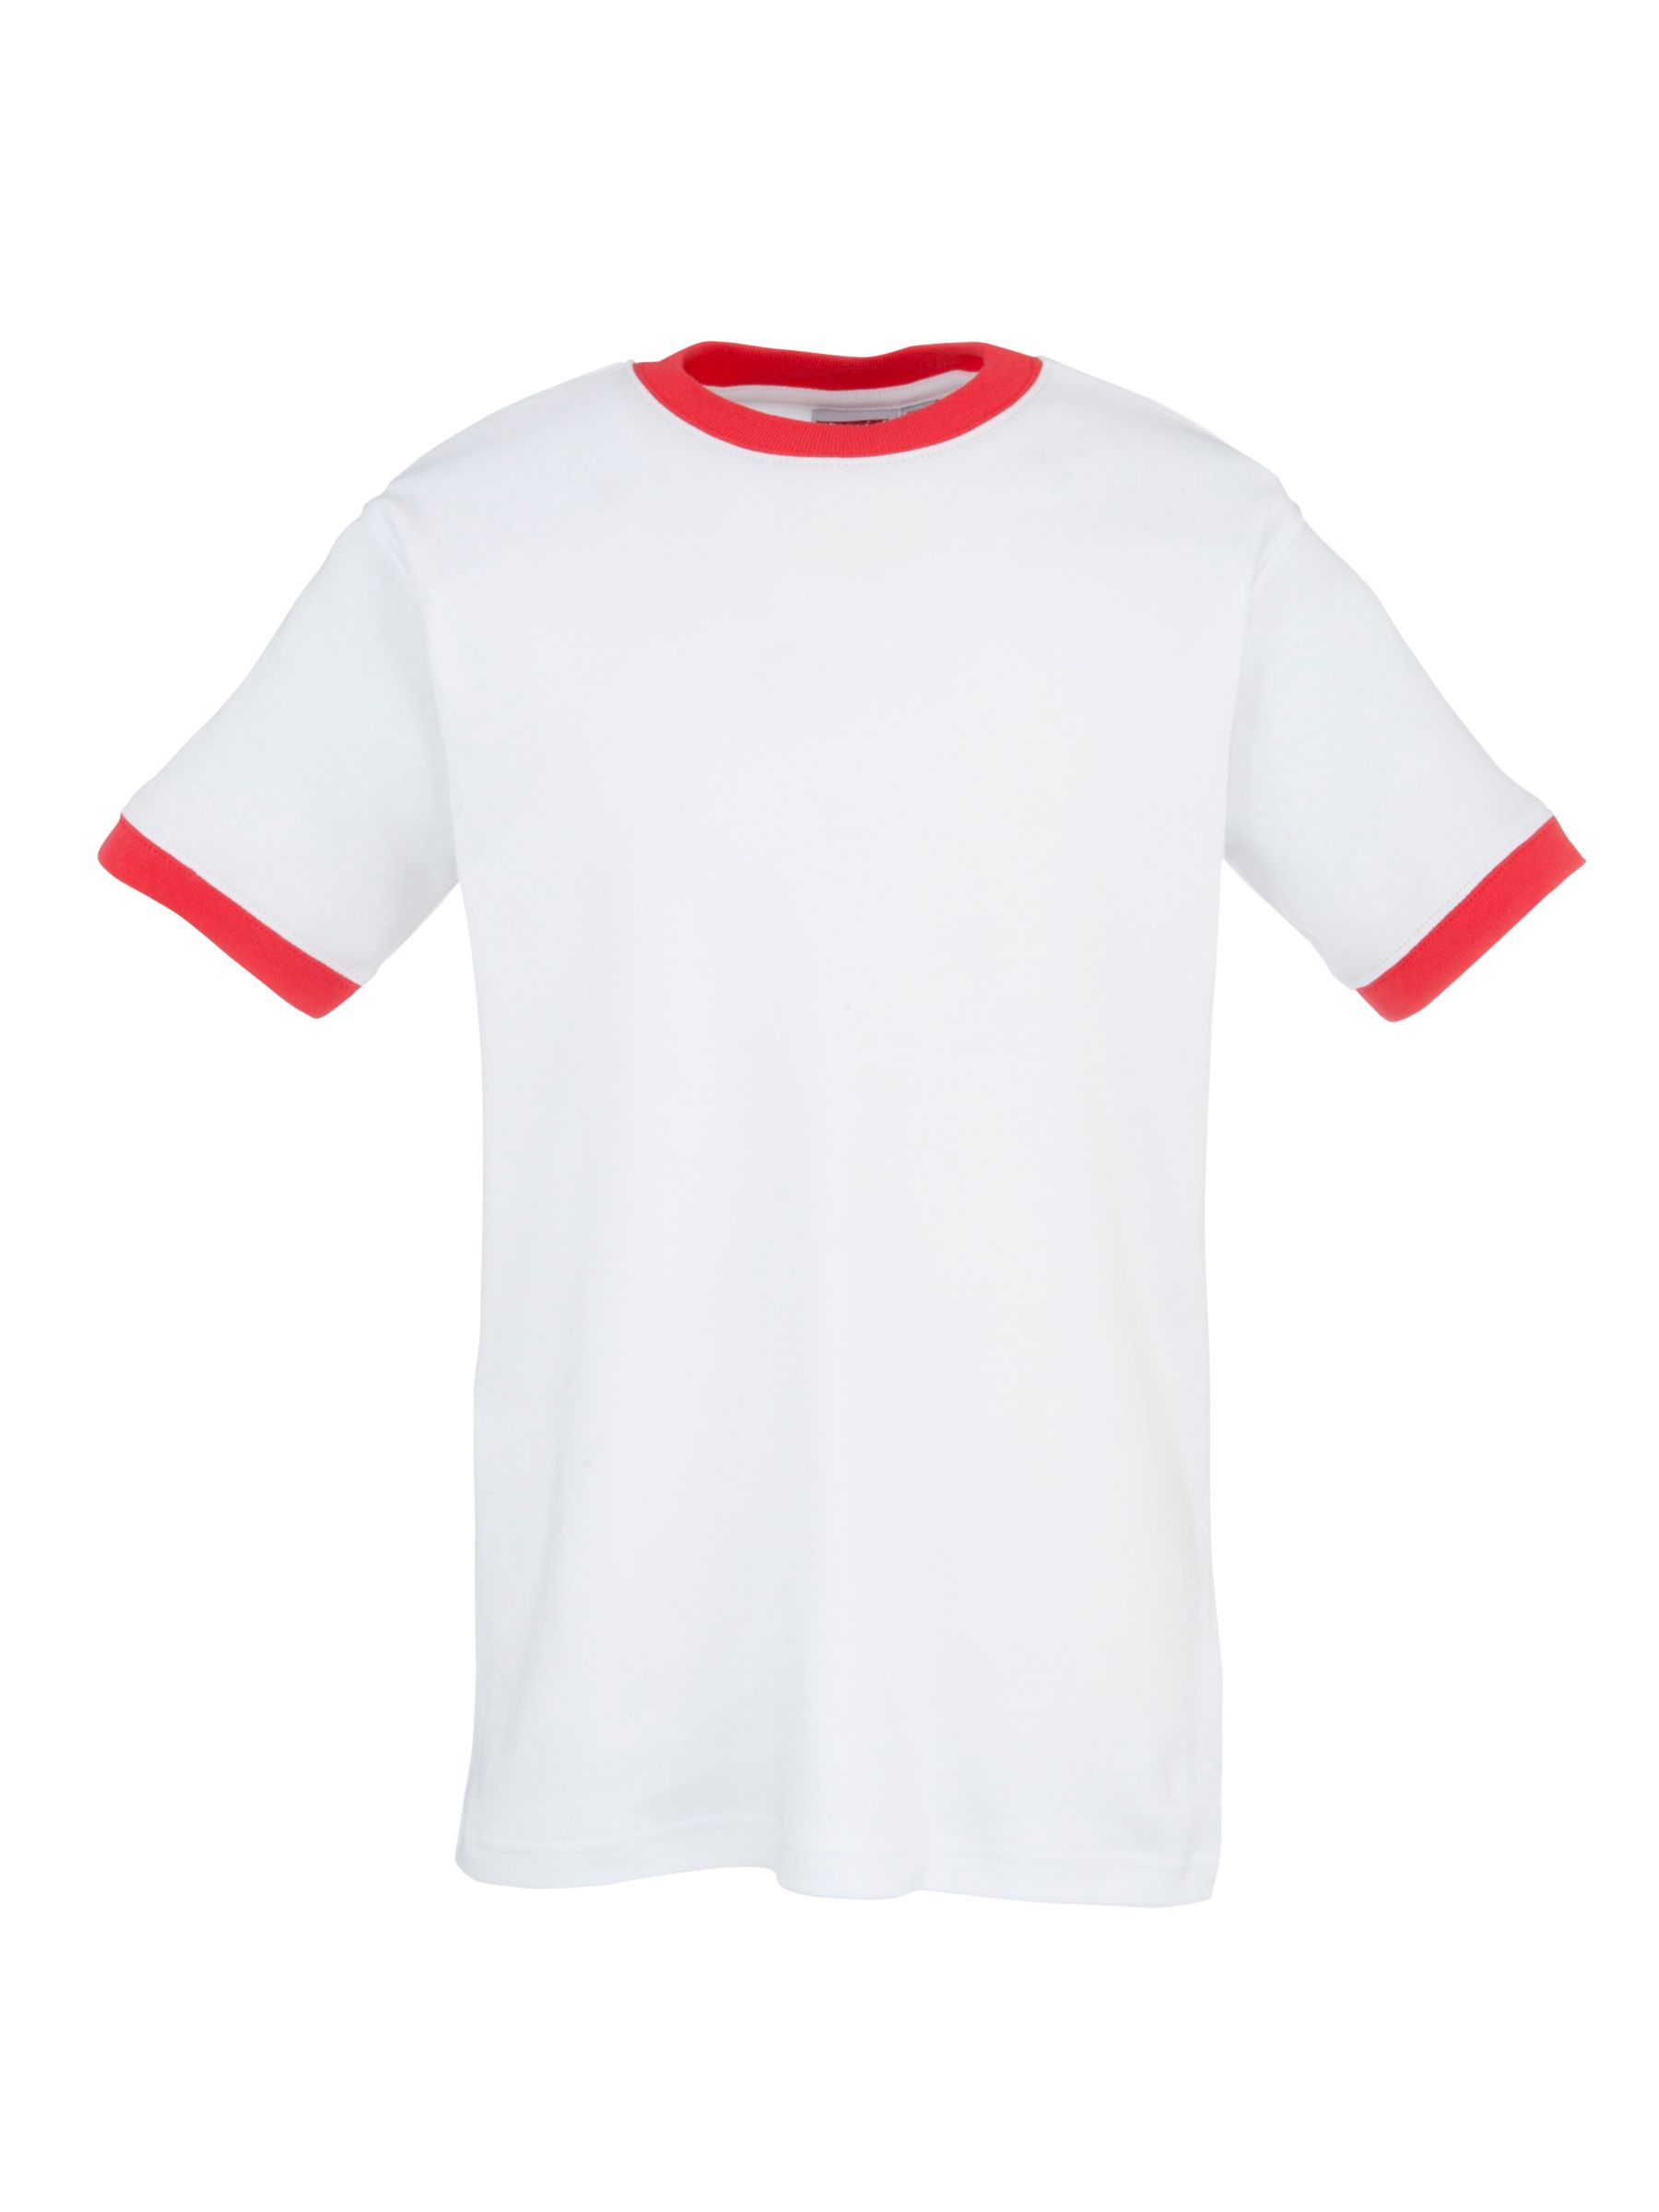 School Unisex T-Shirt Trim, White/Red, Chest